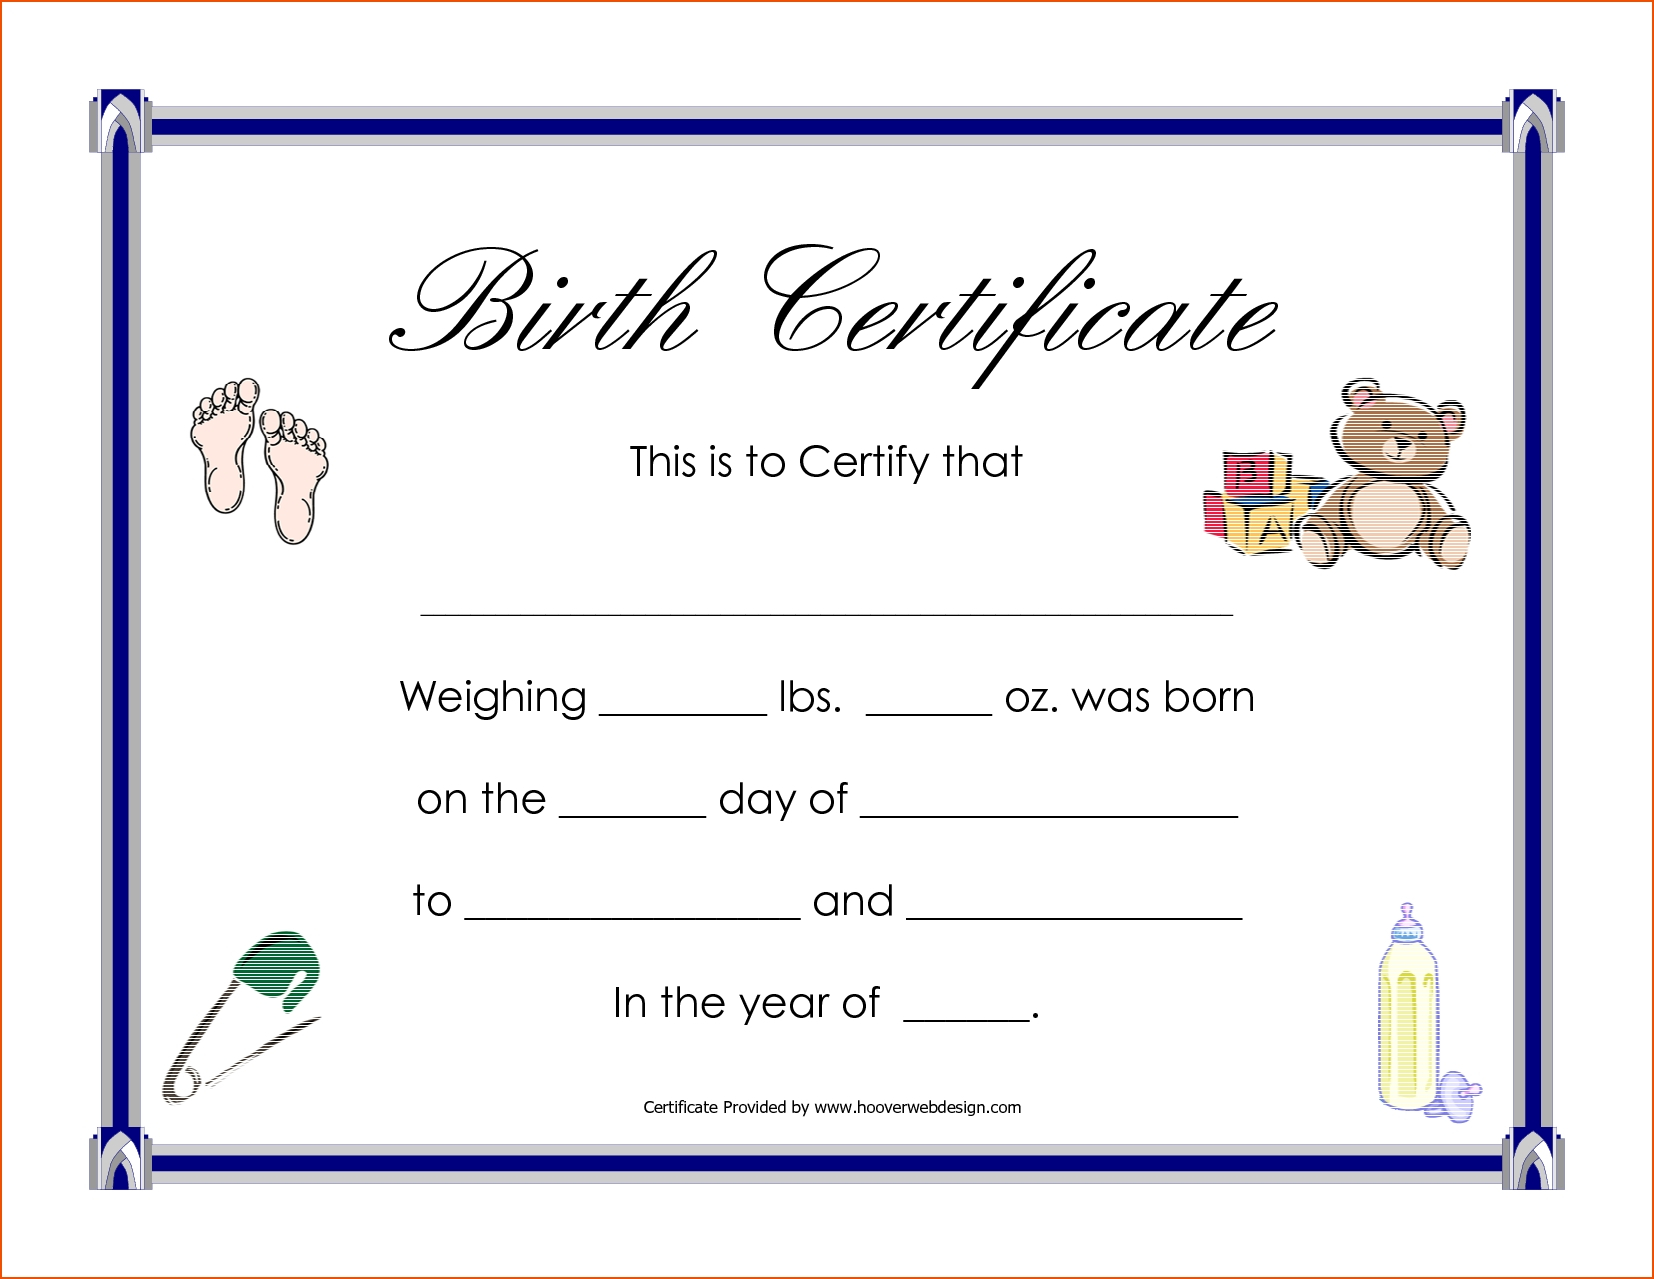 A Birth Certificate Template | Safebest.xyz Pertaining To Editable Birth Certificate Template